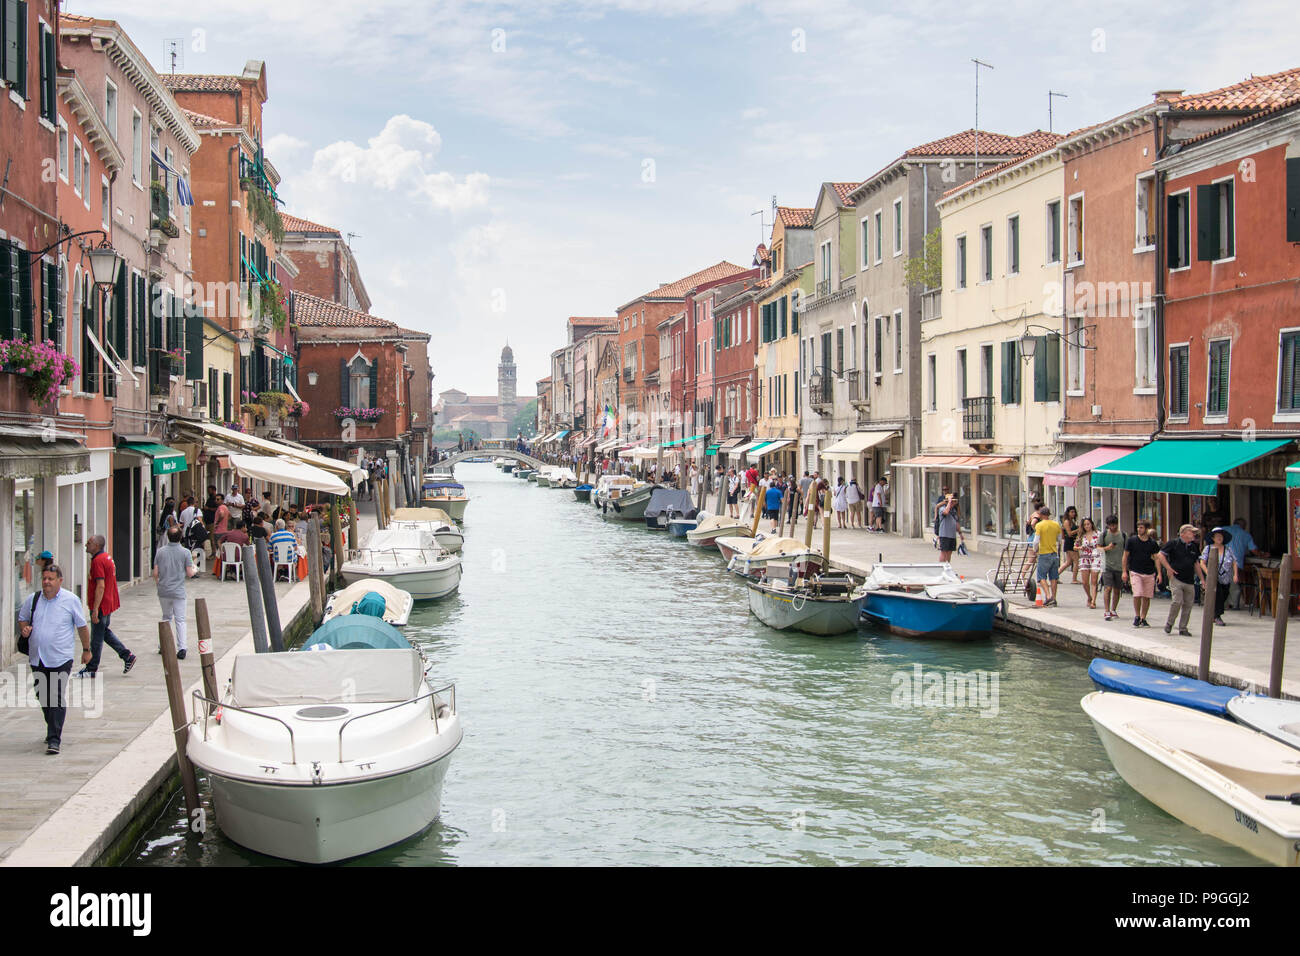 Europa, Italien, Veneto, Venedig. Murano Promenade auf der Insel Murano. Sonnigen Tag an der Fondamenta Manin und Fondamenta Vetrai. Stockfoto